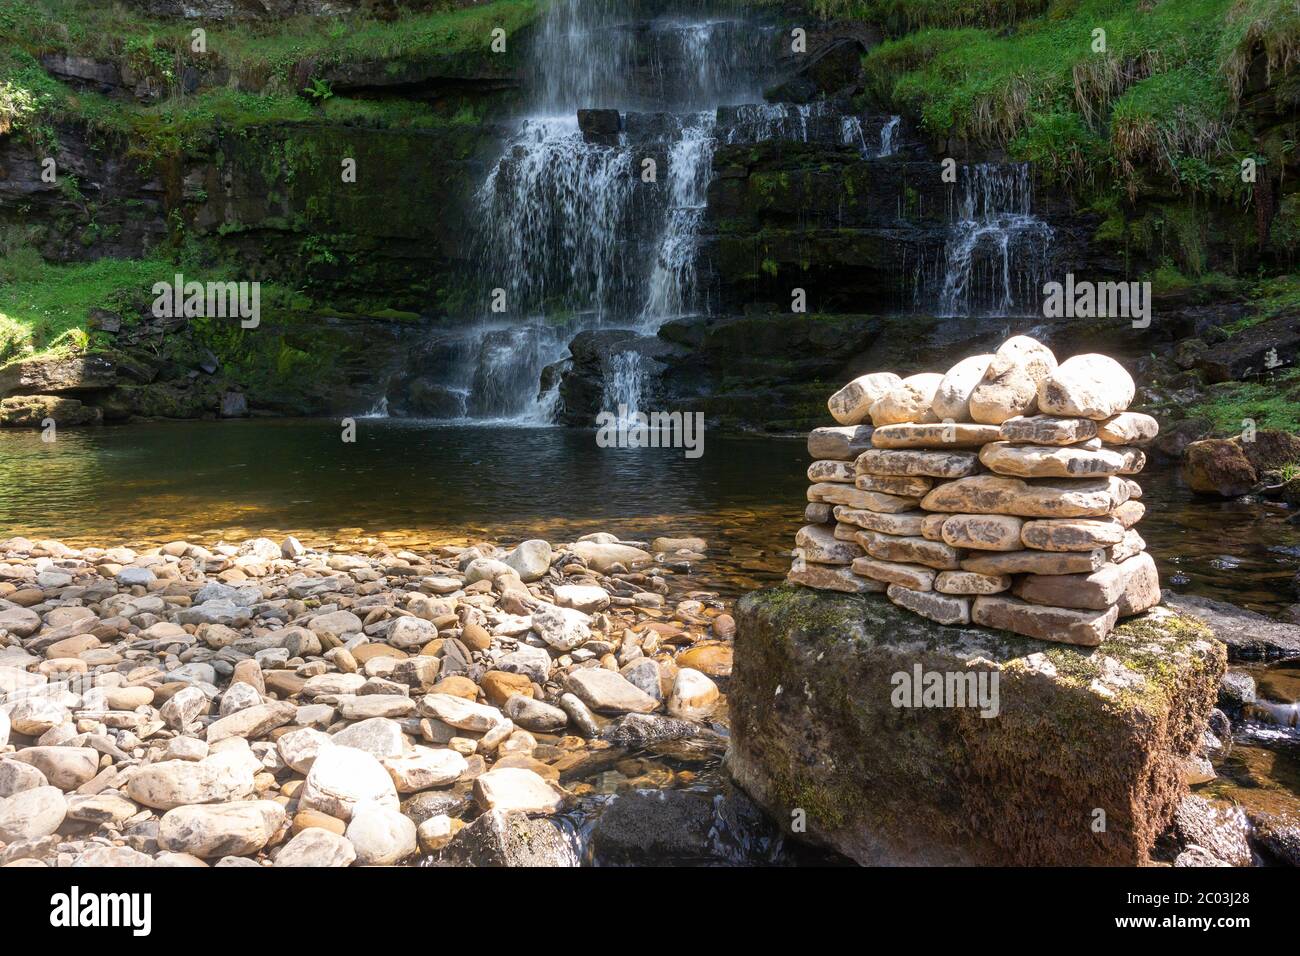 Upper Uldale Falls, ein gut versteckter Wasserfall am River Rawthey am Rande des Howgill Fells am Baugh-Wasserfall. Yorkshire Dales National Park, Großbritannien. Stockfoto